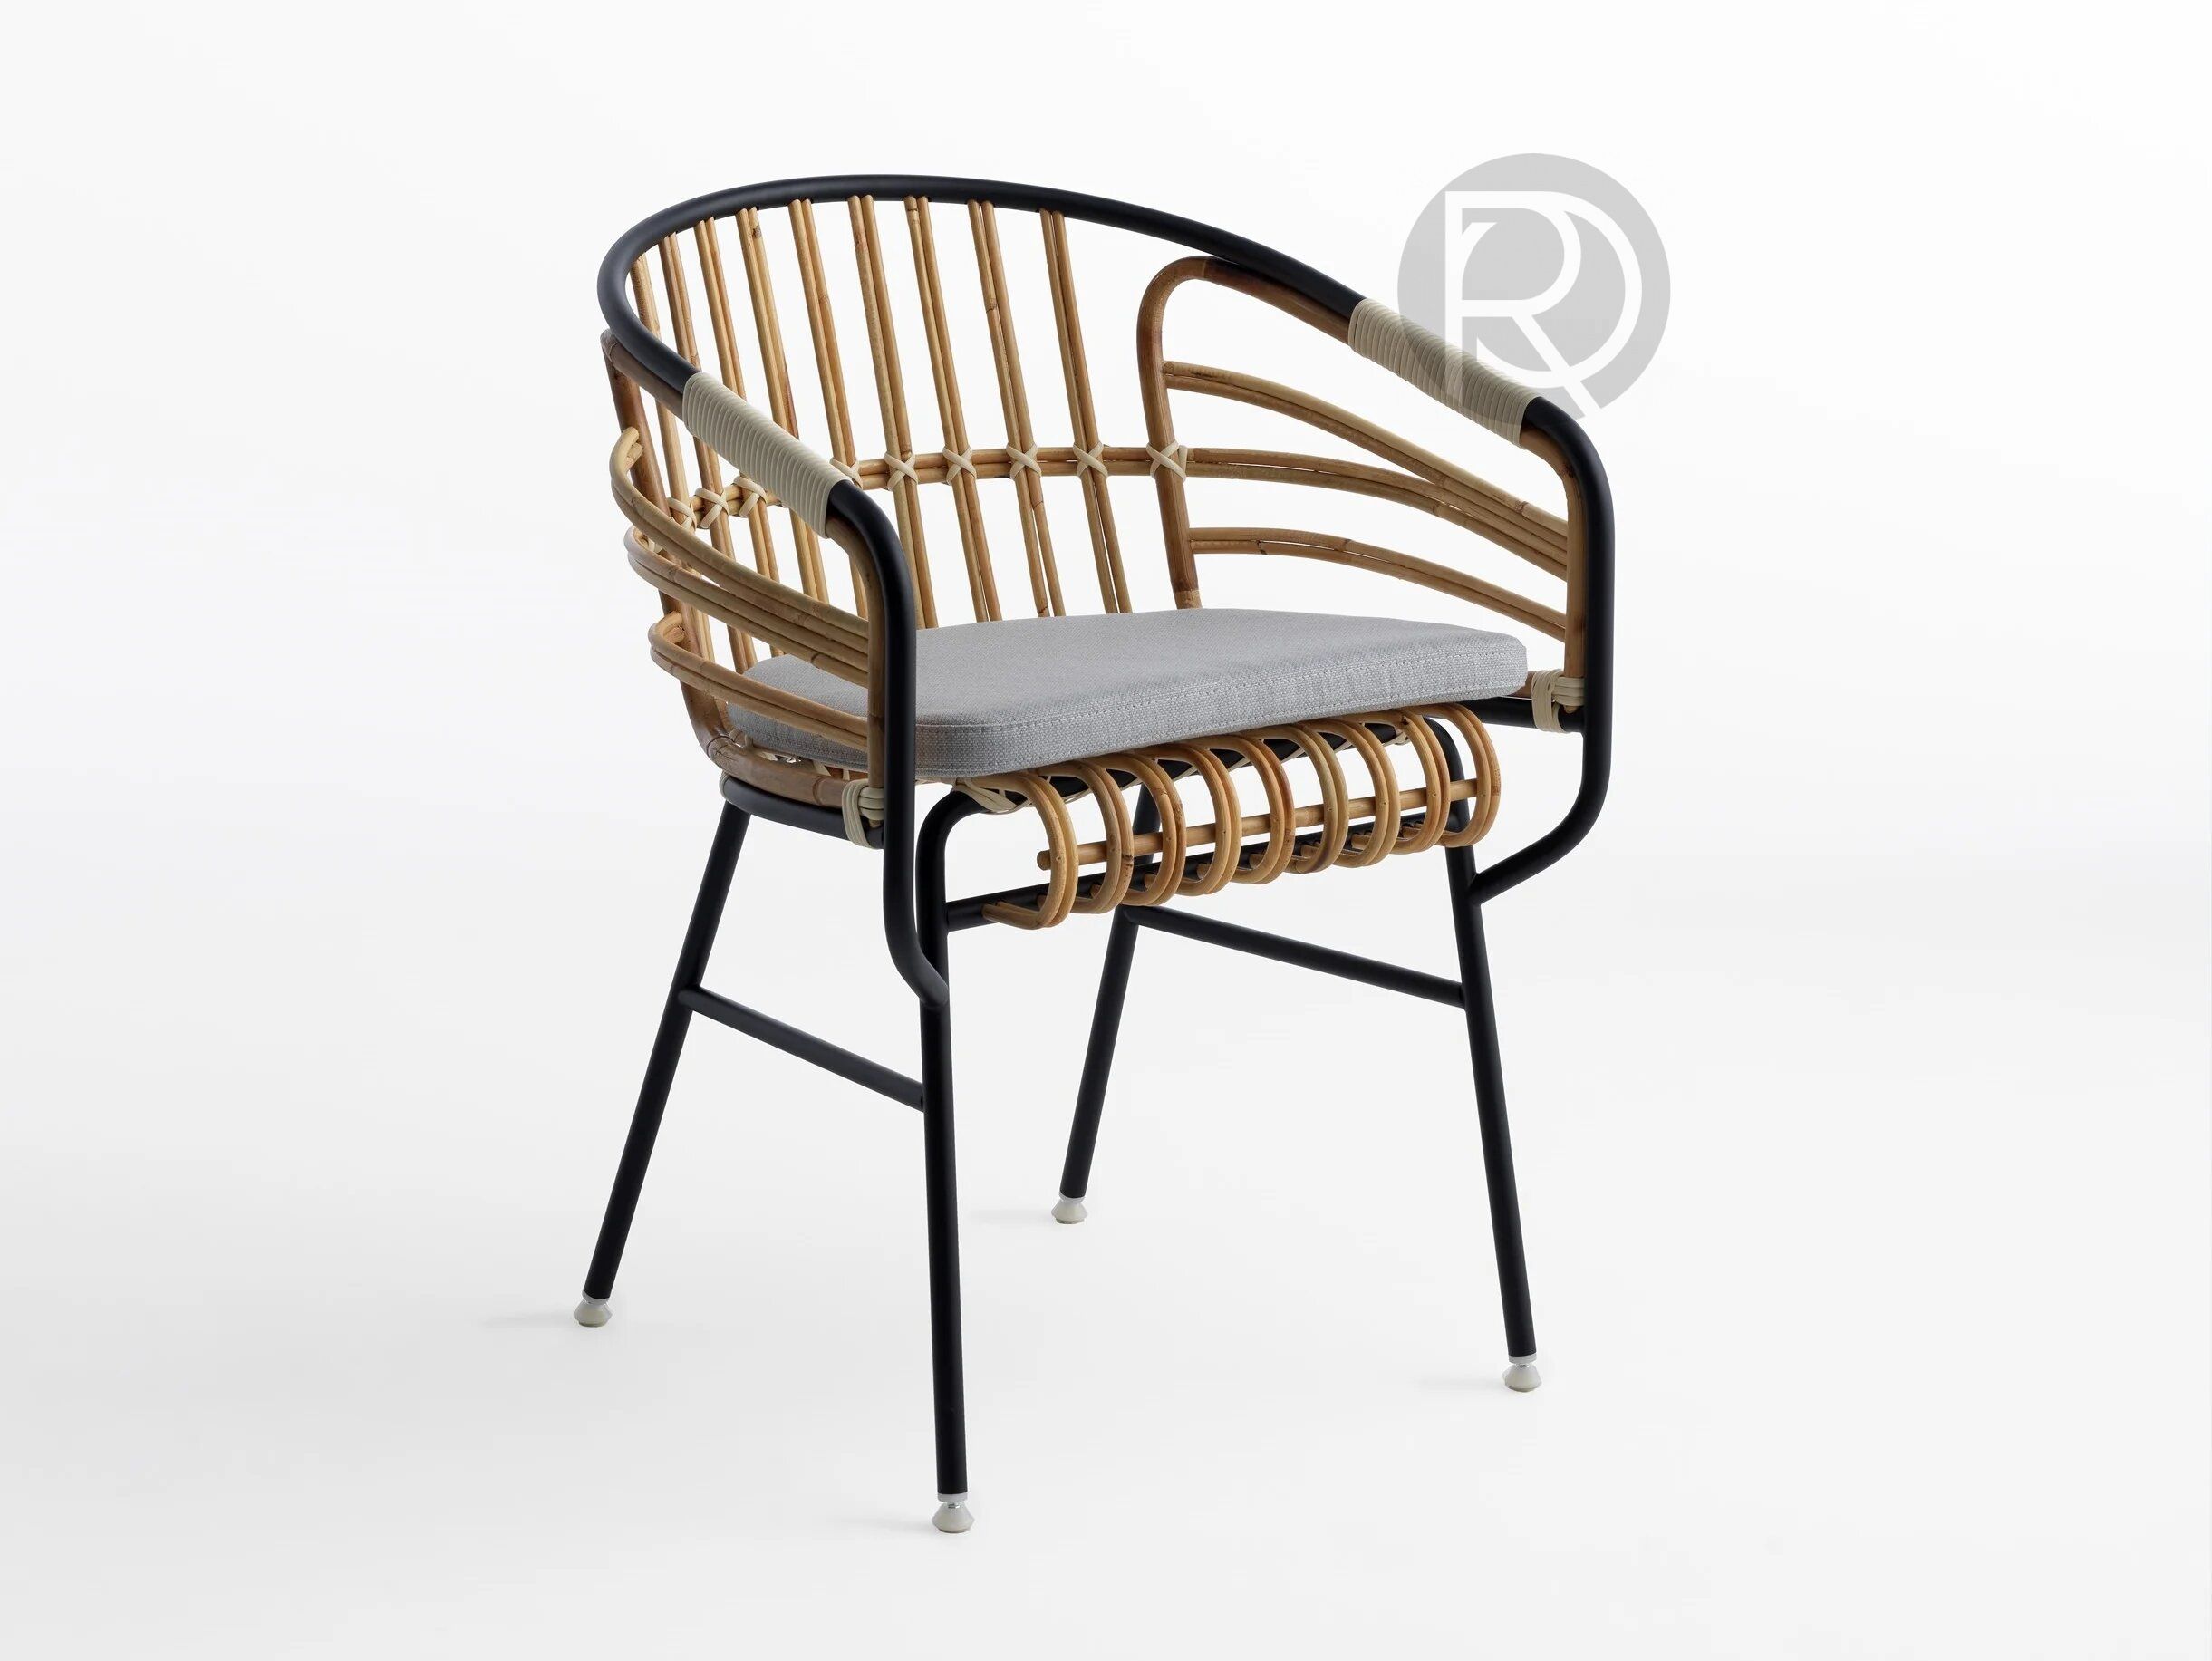 RAPHIA RATTAN Chair by Casamania & Horm